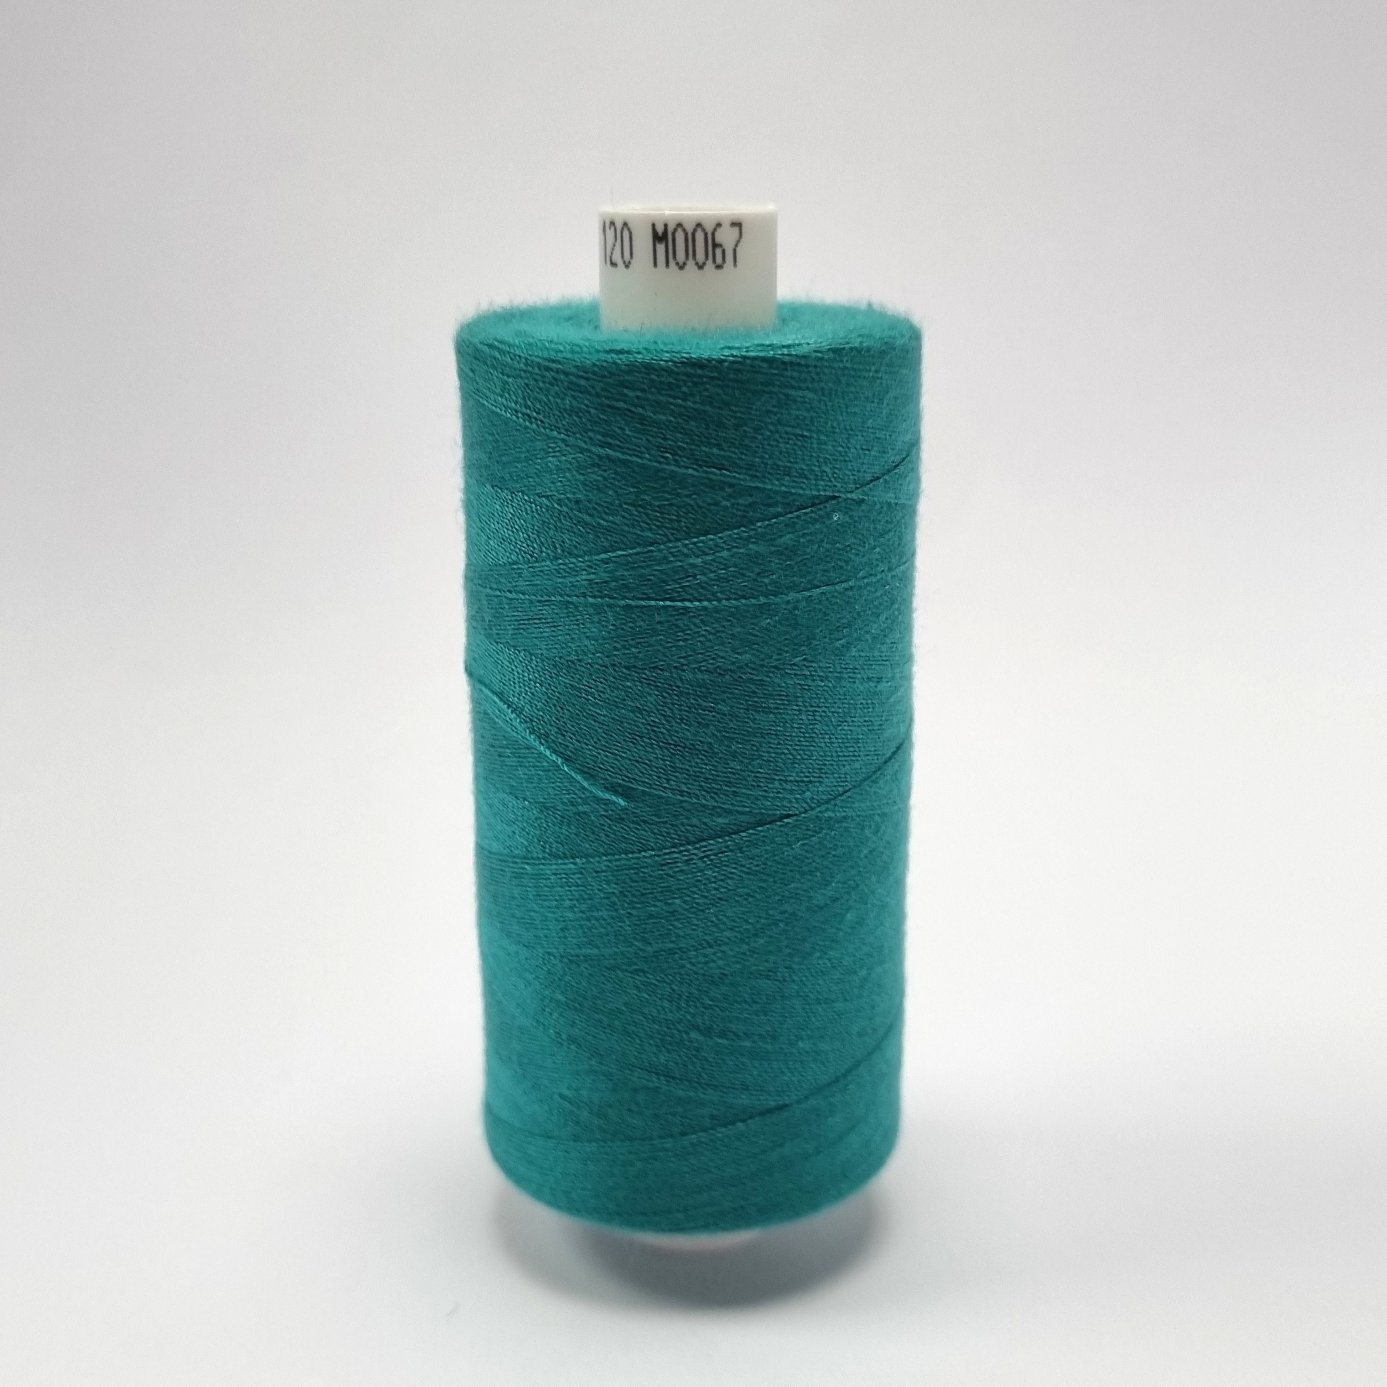 Moon Thread, Teal, 1000 yard reels 99p from Jaycotts Sewing Supplies